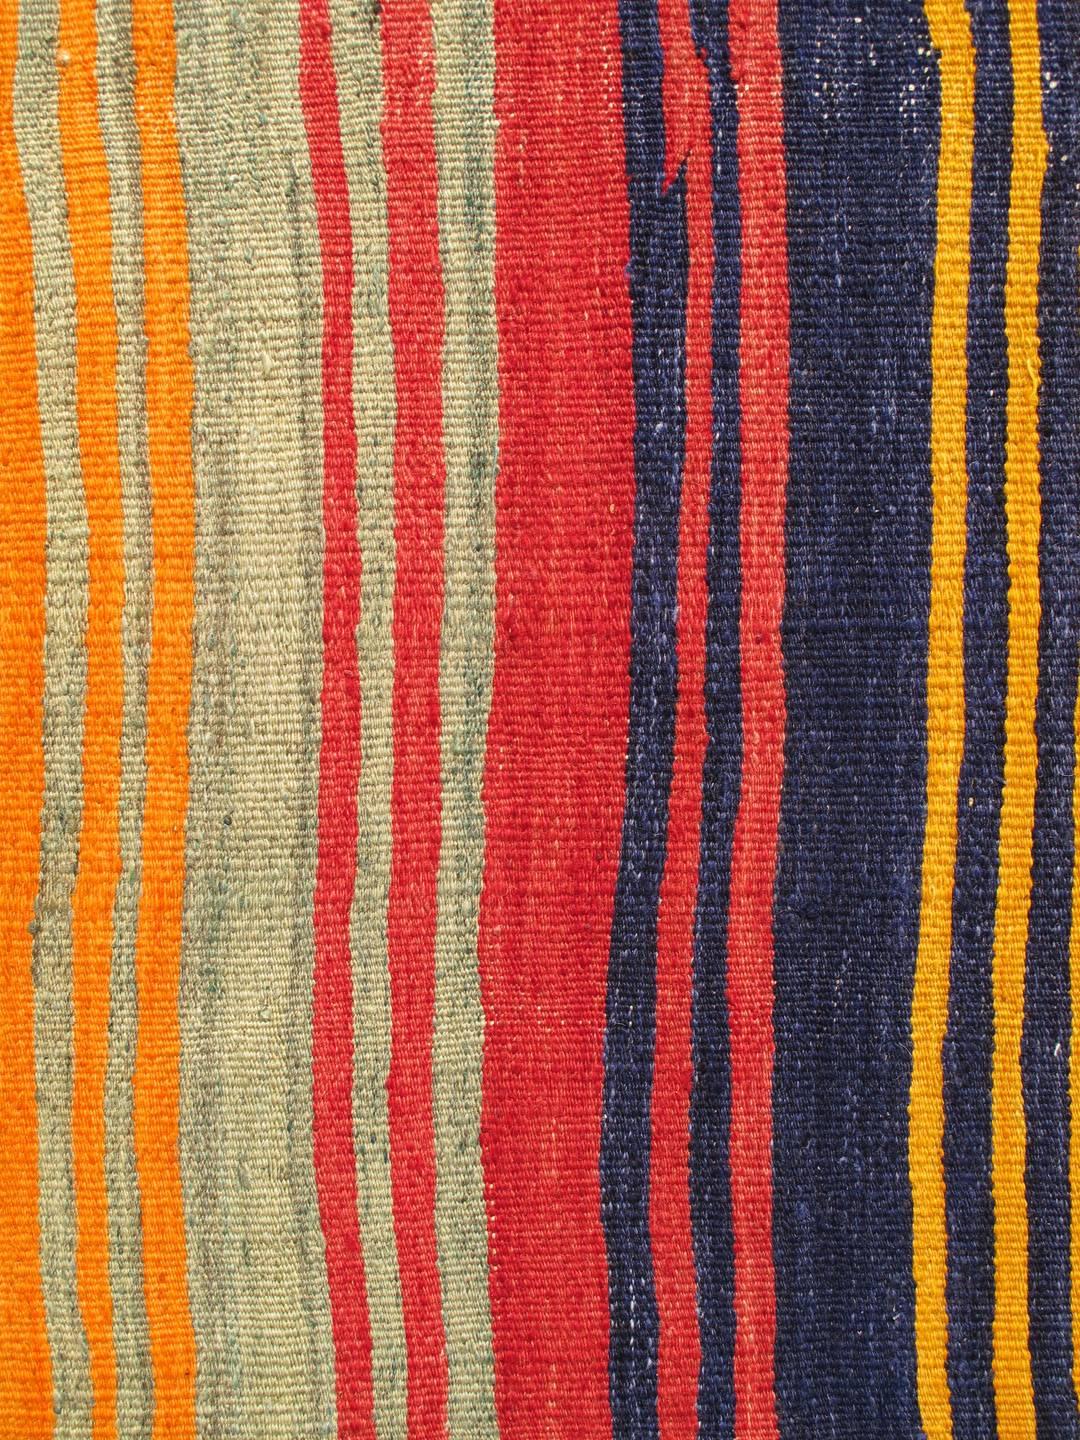 Hand-Woven Vintage Turkish Kilim Rug with Stripes in Seafoam Green, Red, Blue, Gold, Orange